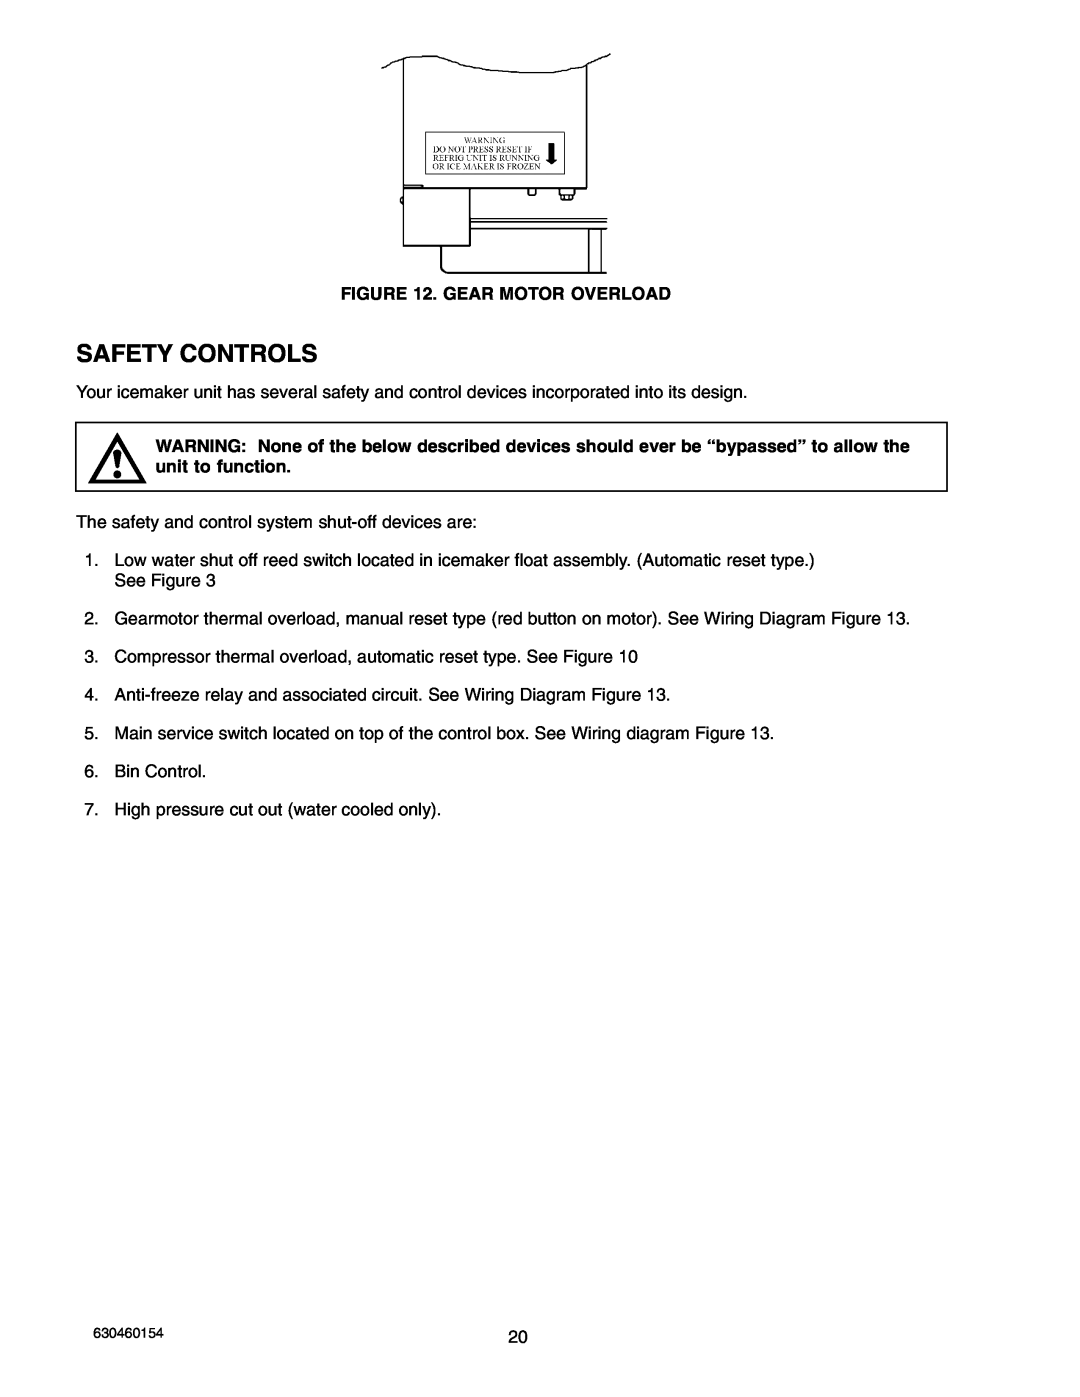 Cornelius UCR 700 Series service manual Safety Controls, Gear Motor Overload 